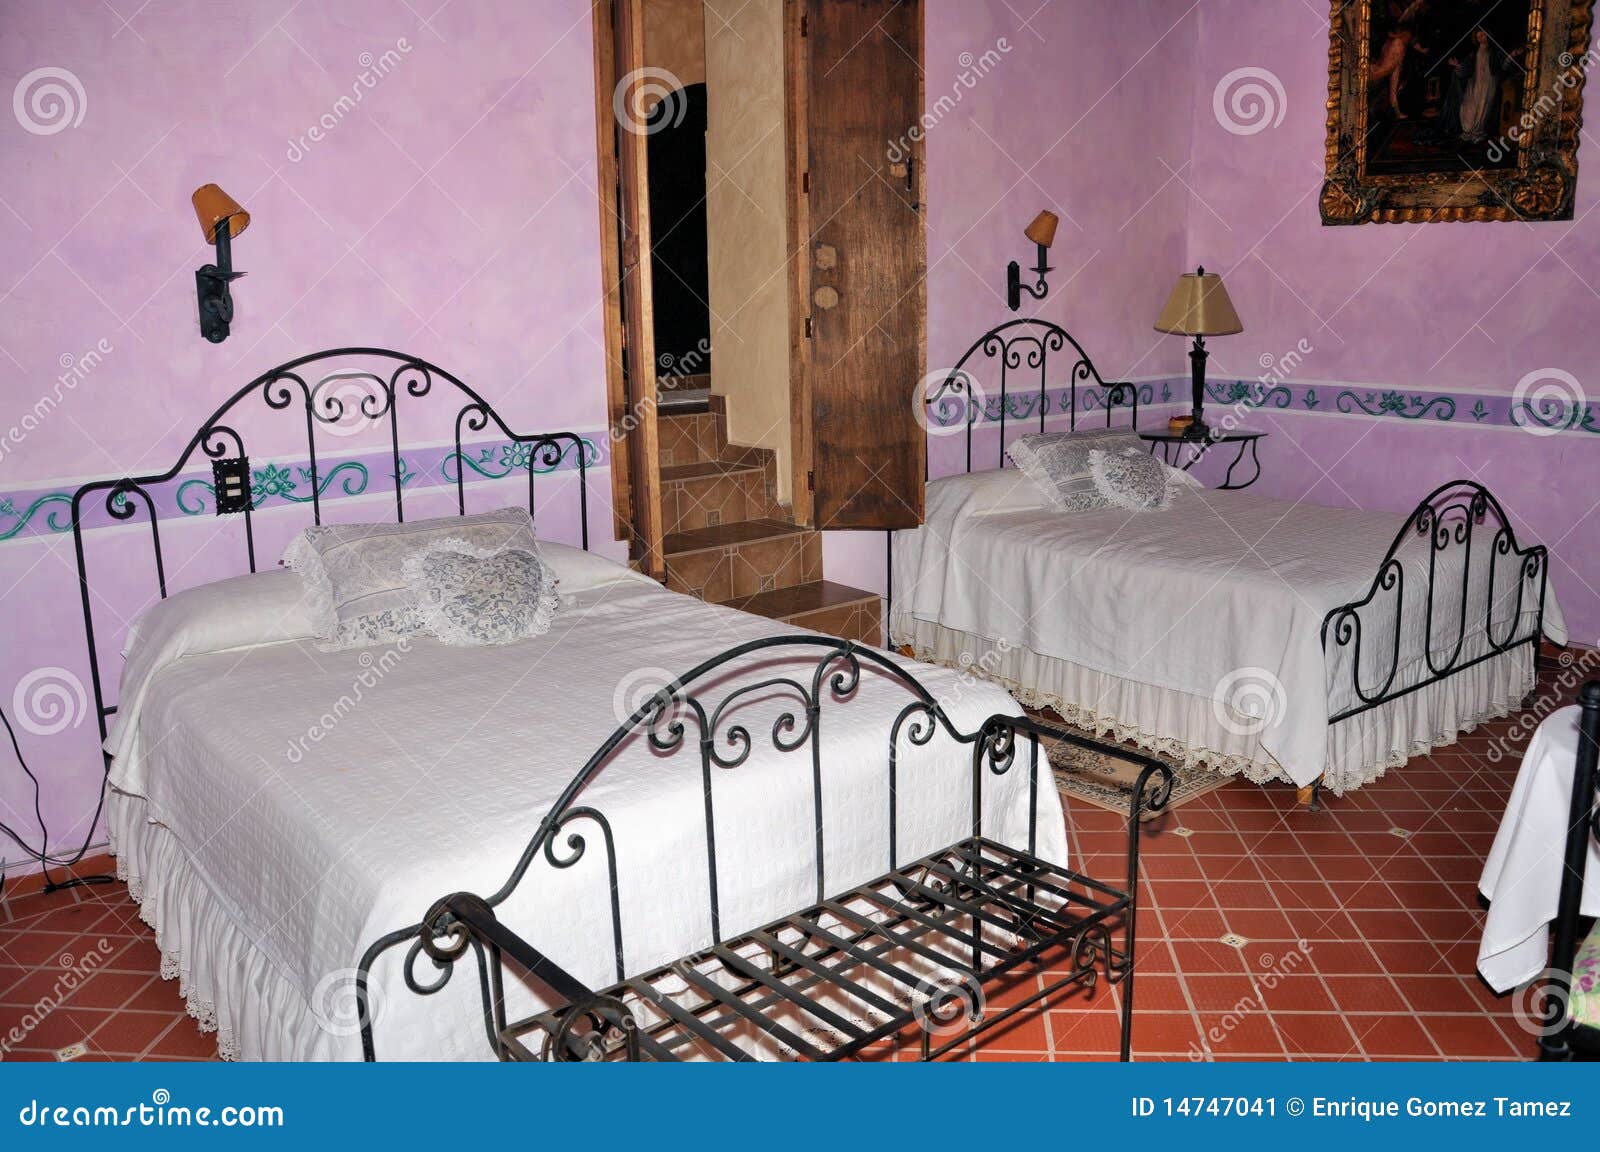 hacienda bedroom